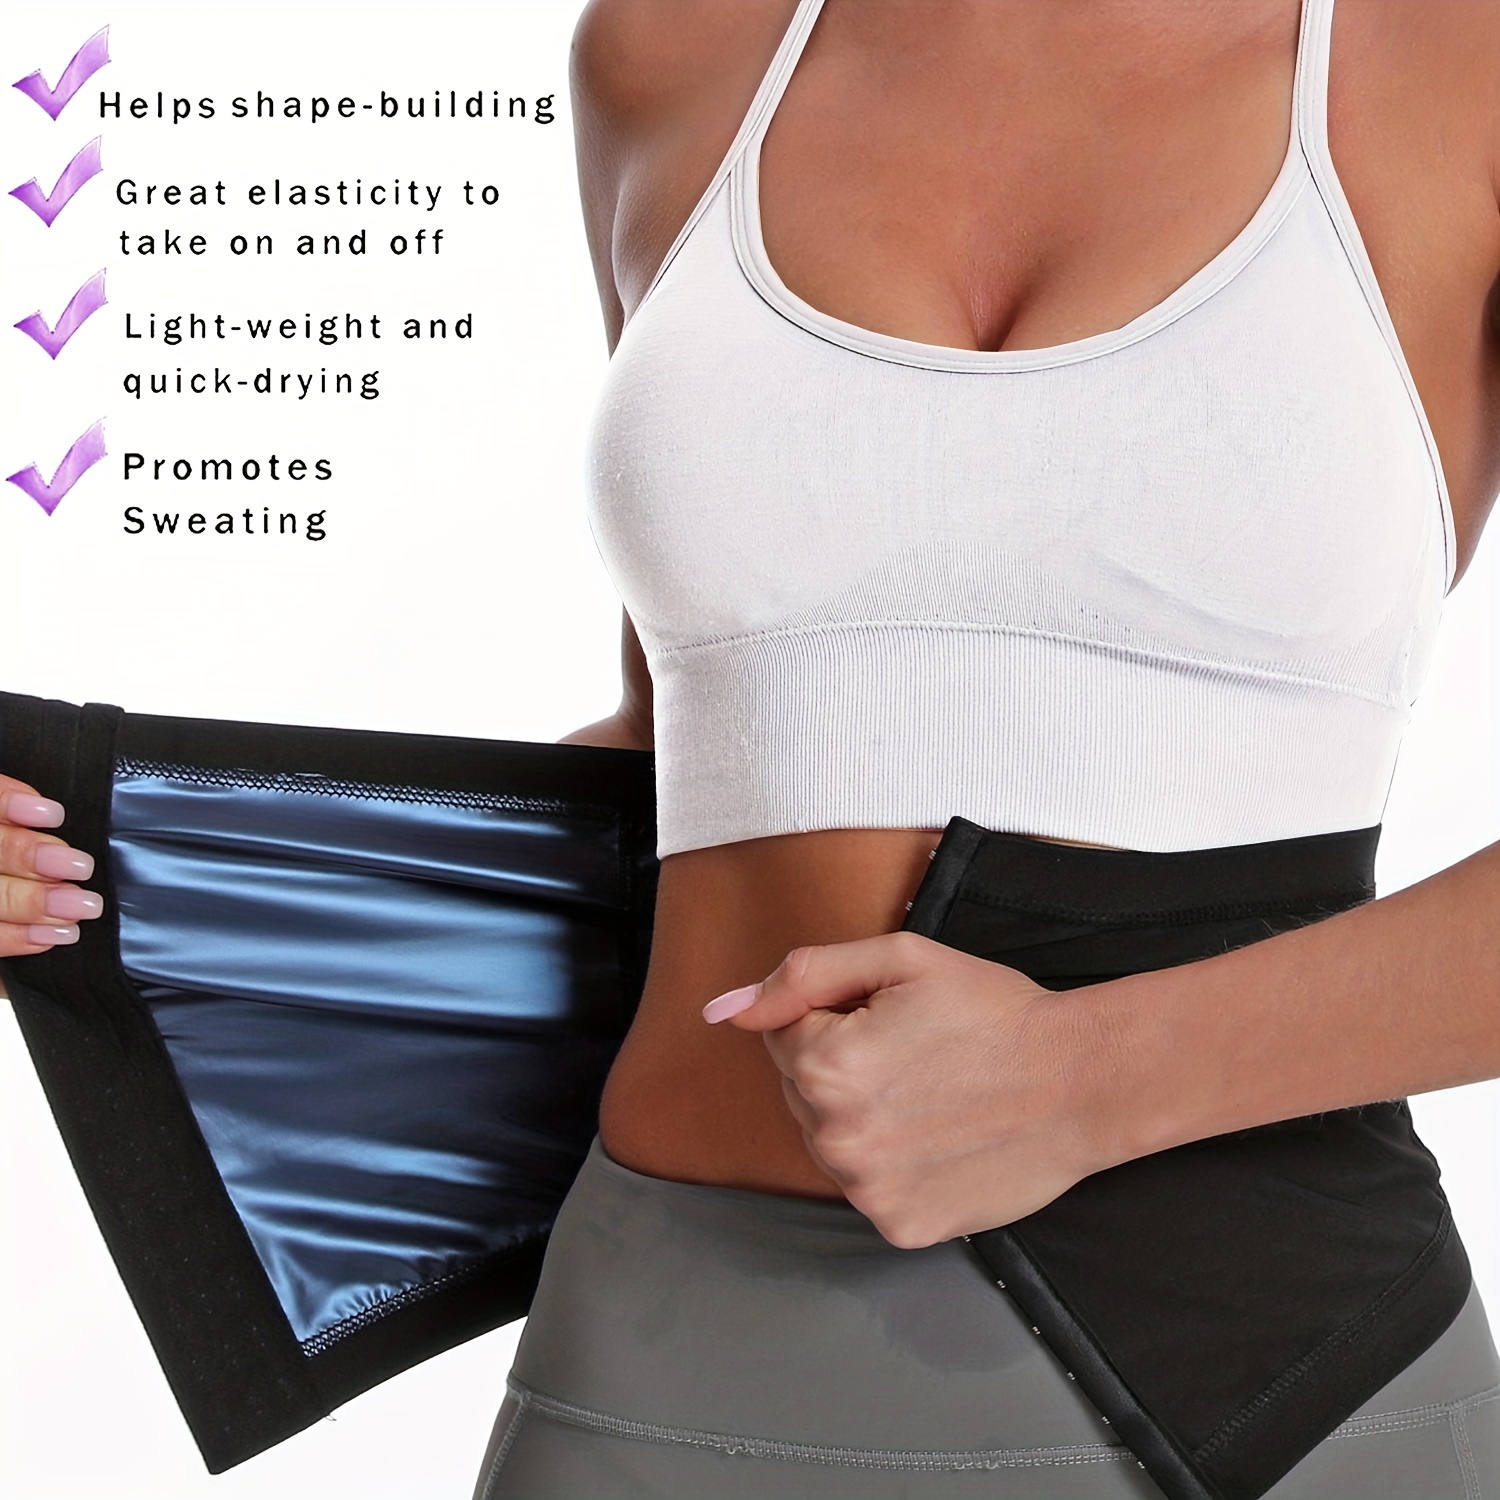 Sports Sweat Belt Premium Waist Trimmer for Women Belly Fat Burner Lose  Weight